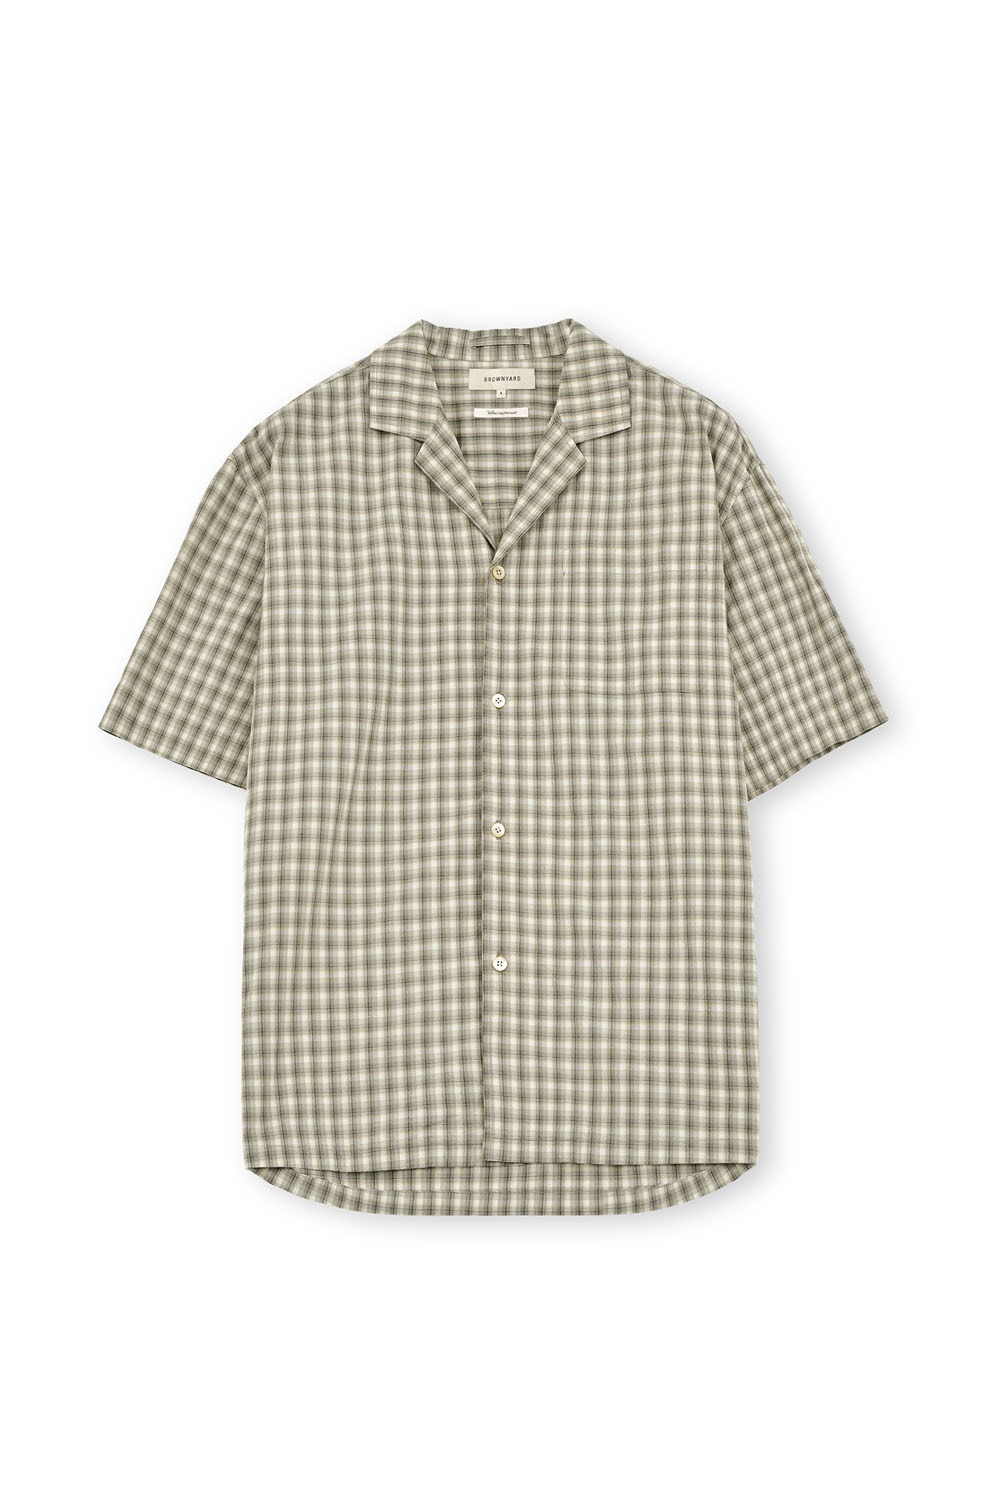 Open Collar Half Shirt-Beige Check